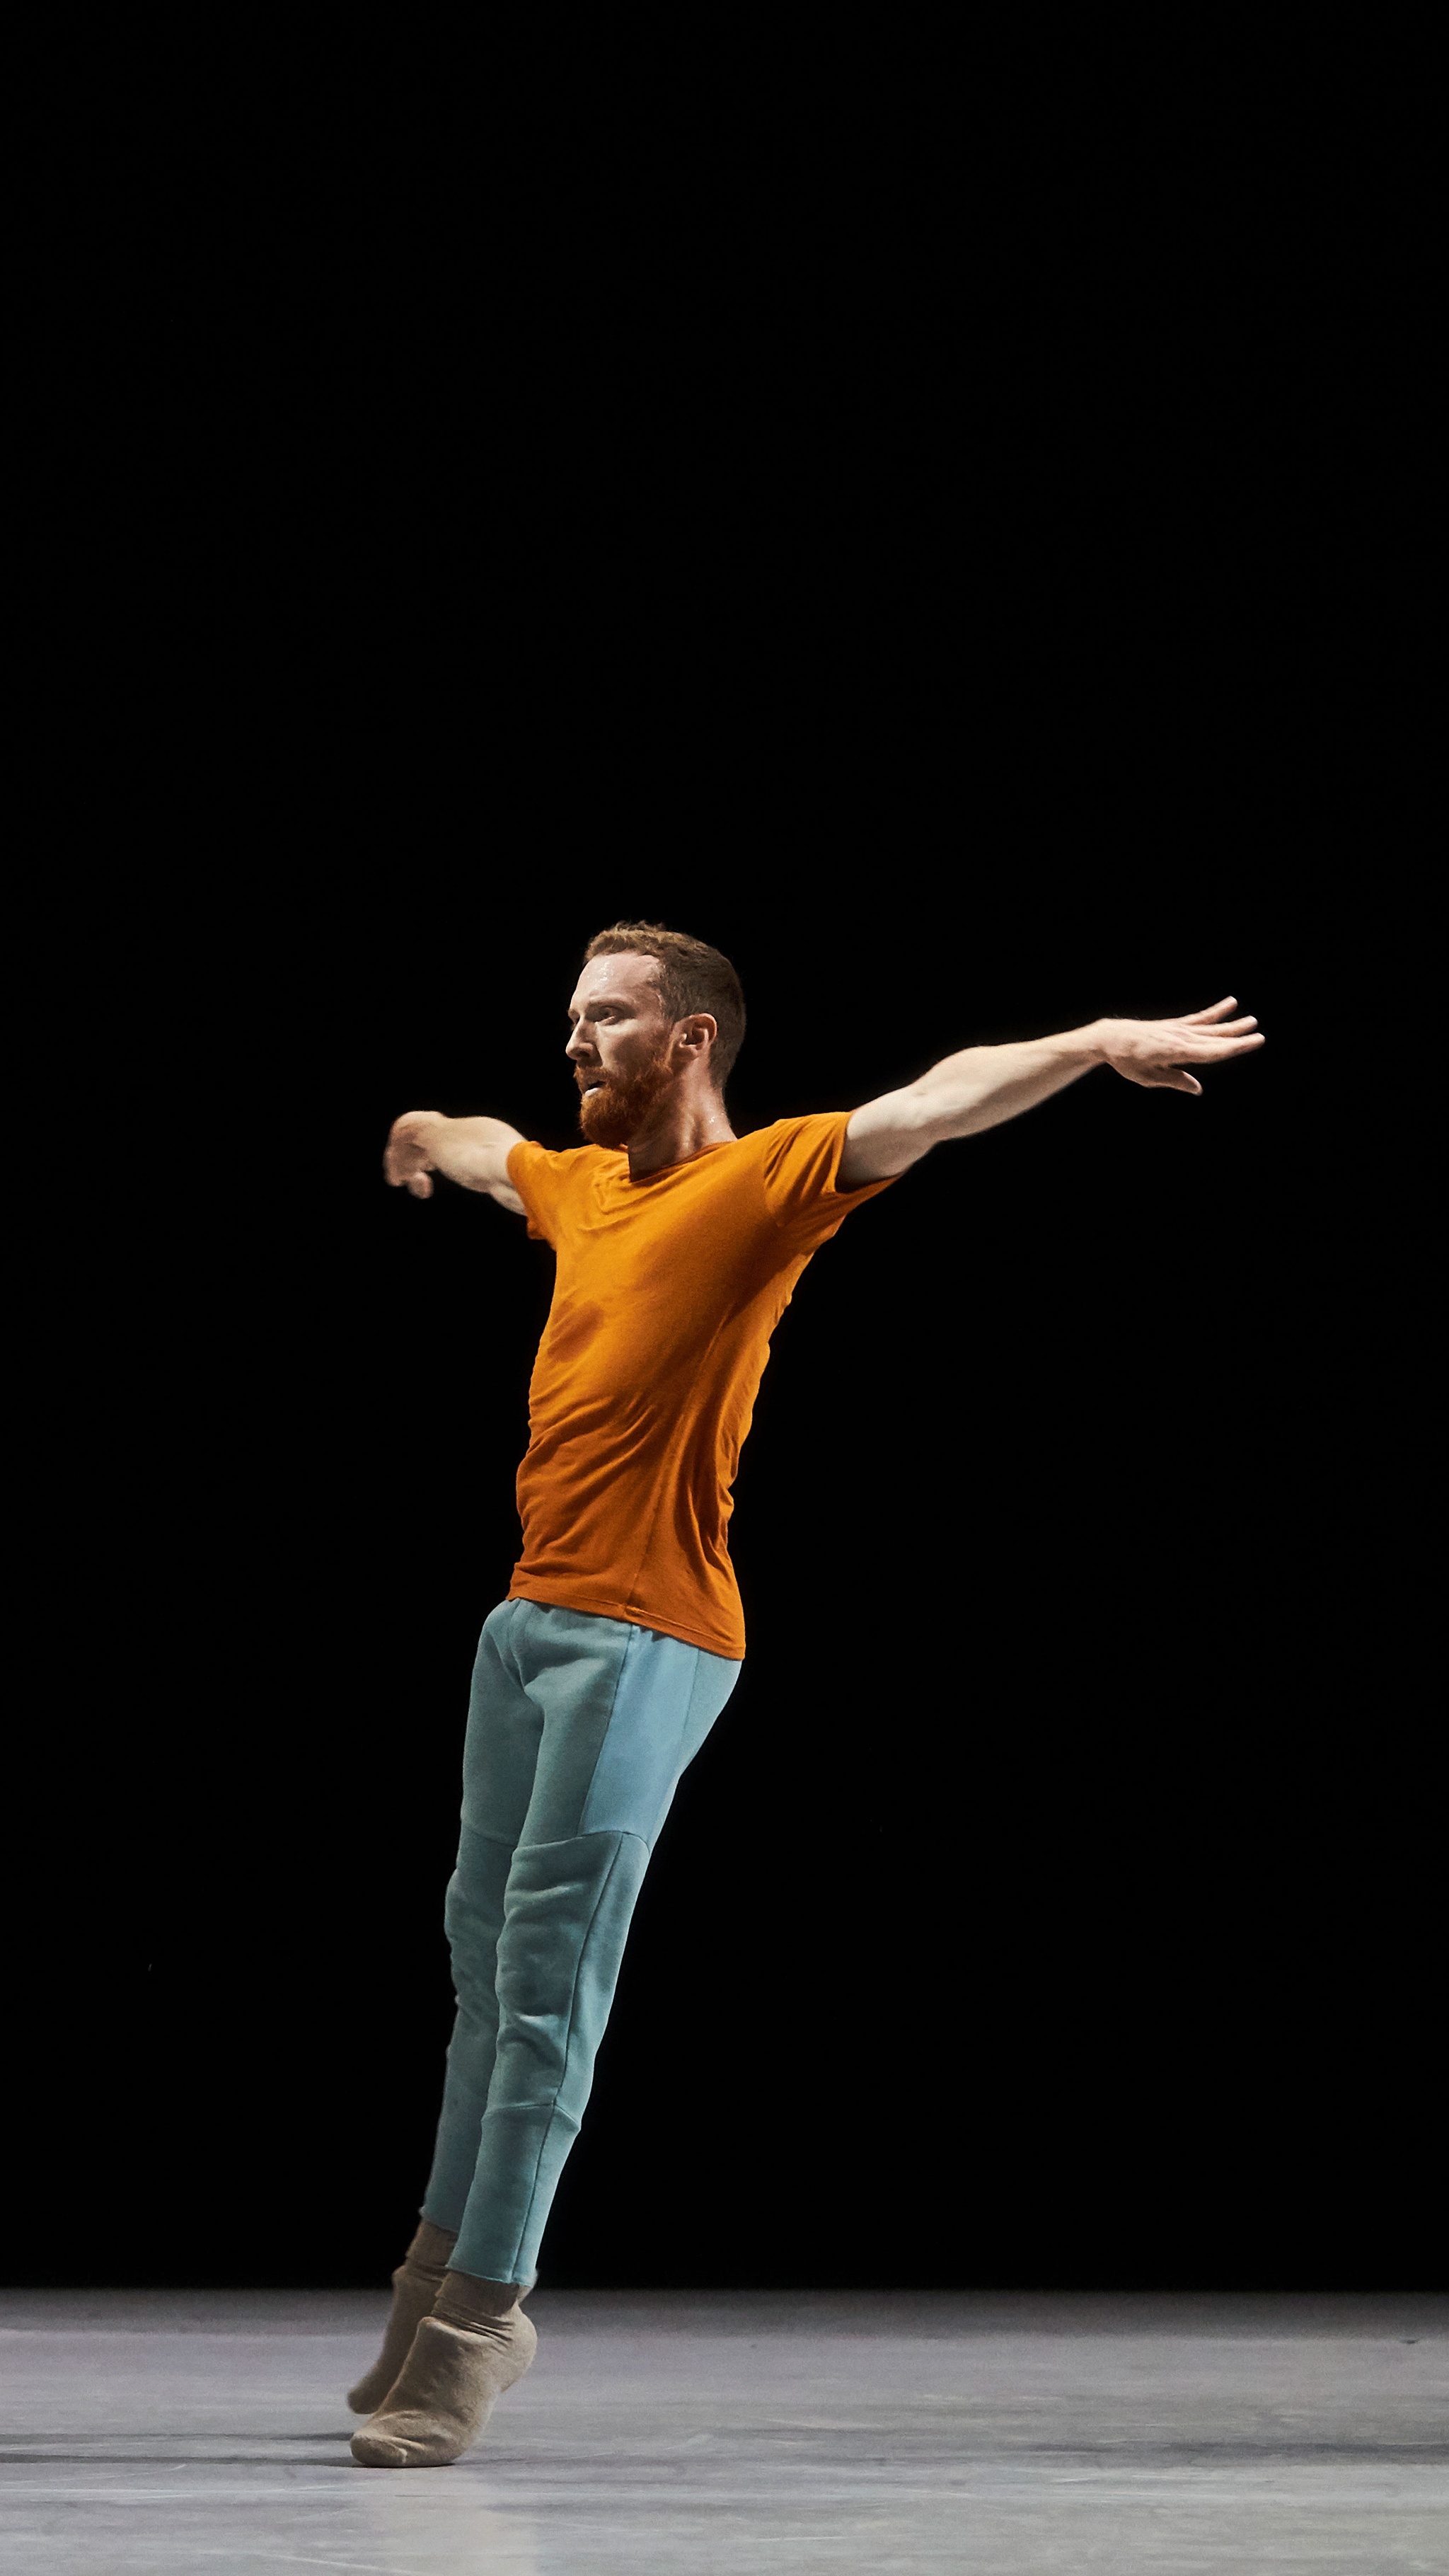 Dancer in an orange shirt, dancing against black background.